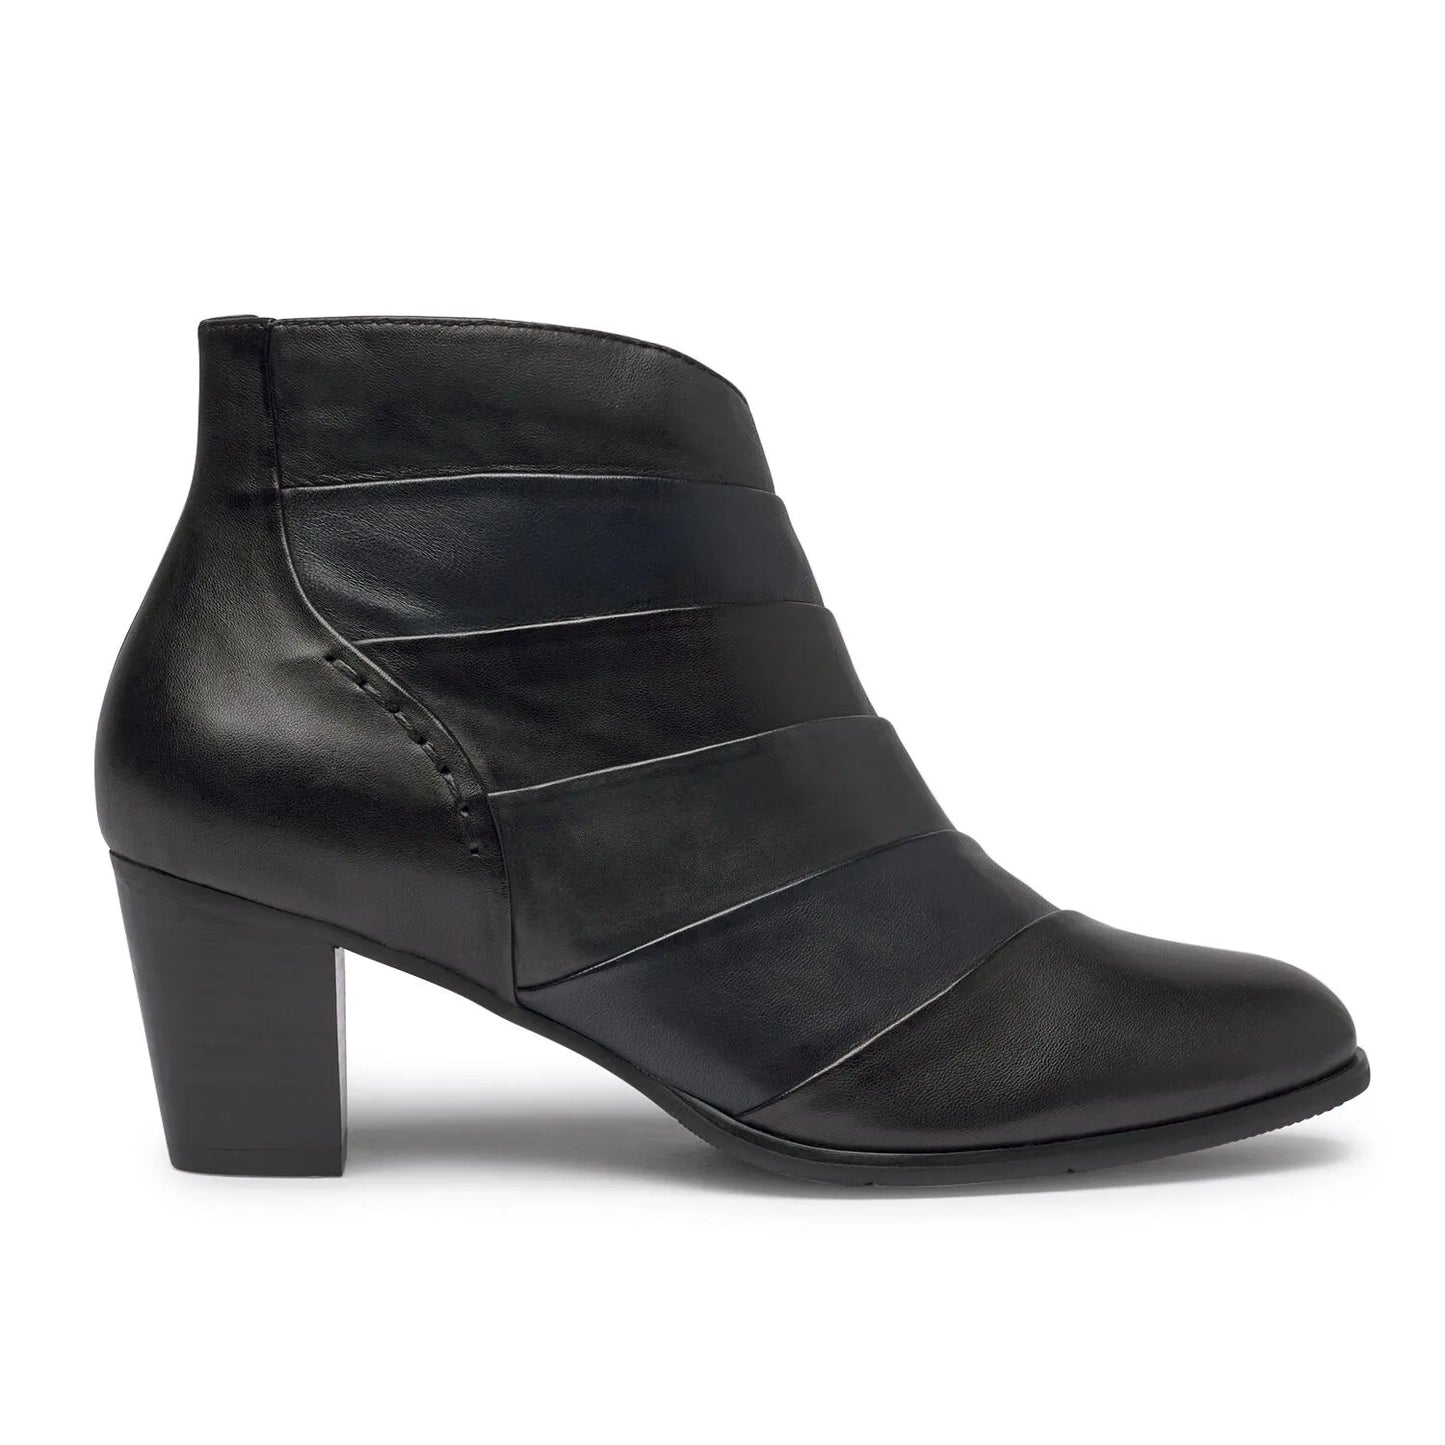 REGARDE LE CIEL | 女性の足首ブーツ | SONIA 38 GLOVE BLACK / NAVY / PIOMBO | 黒